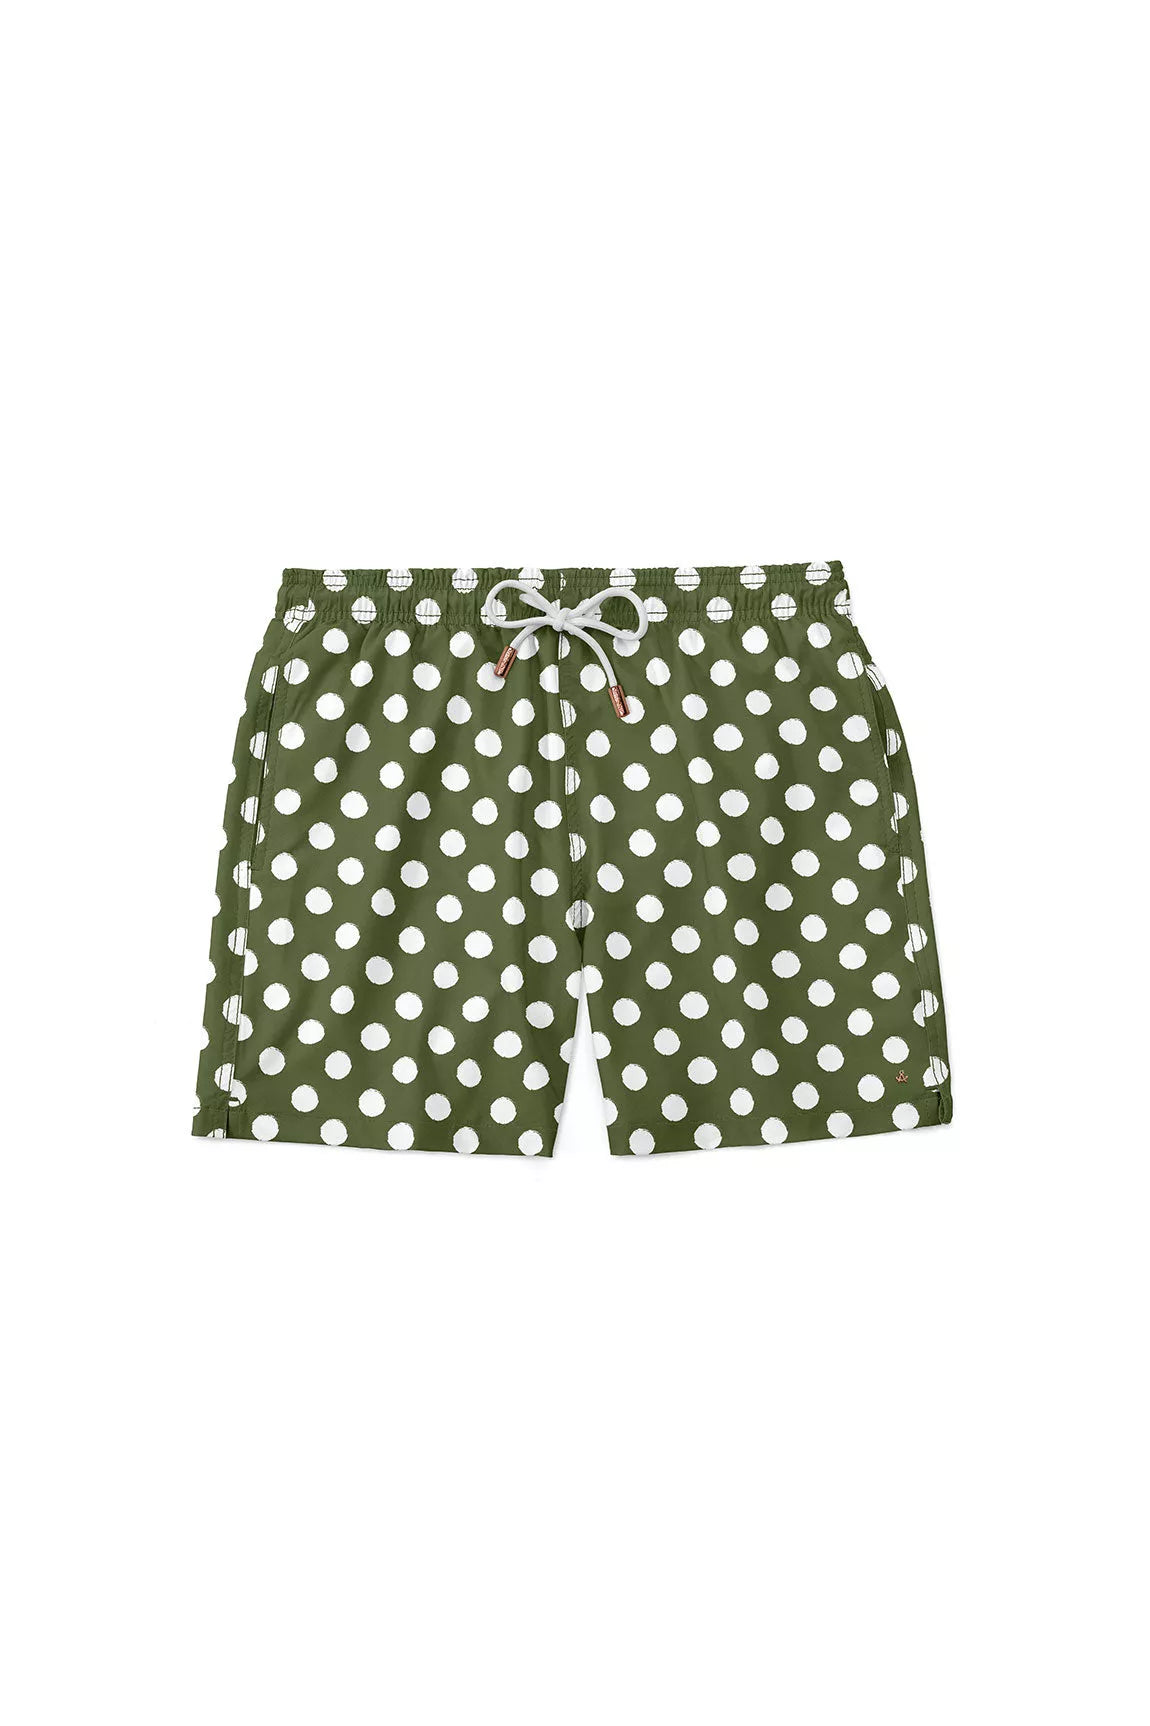 Pantaloneta Vintage Dots Olive Green